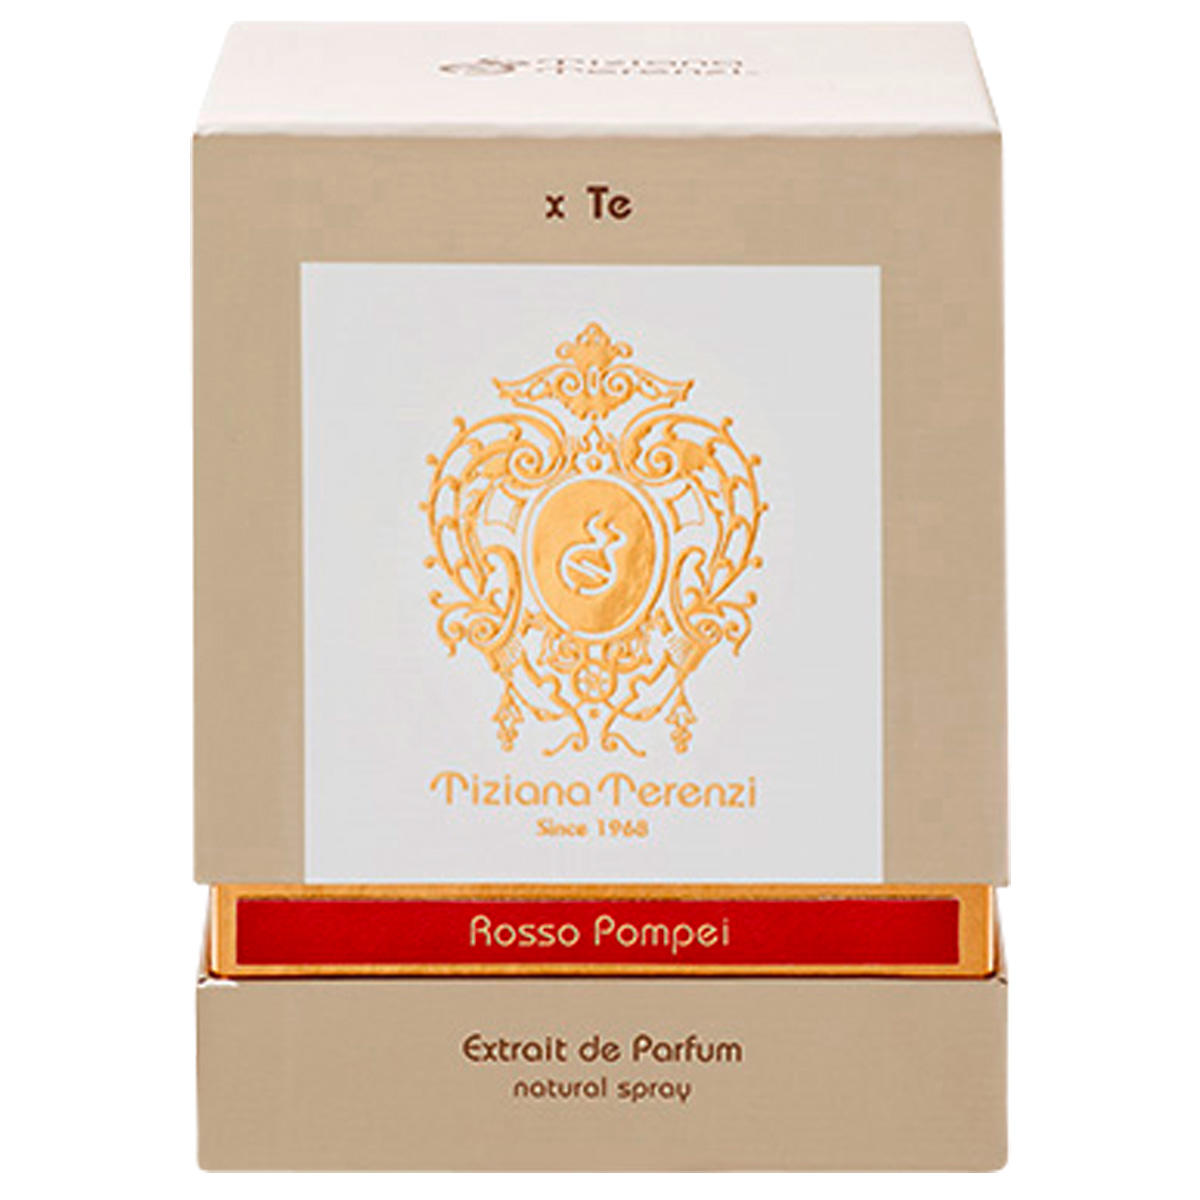 Tiziana Terenzi Rosso Pompei Extrait de Parfum 100 ml - 3